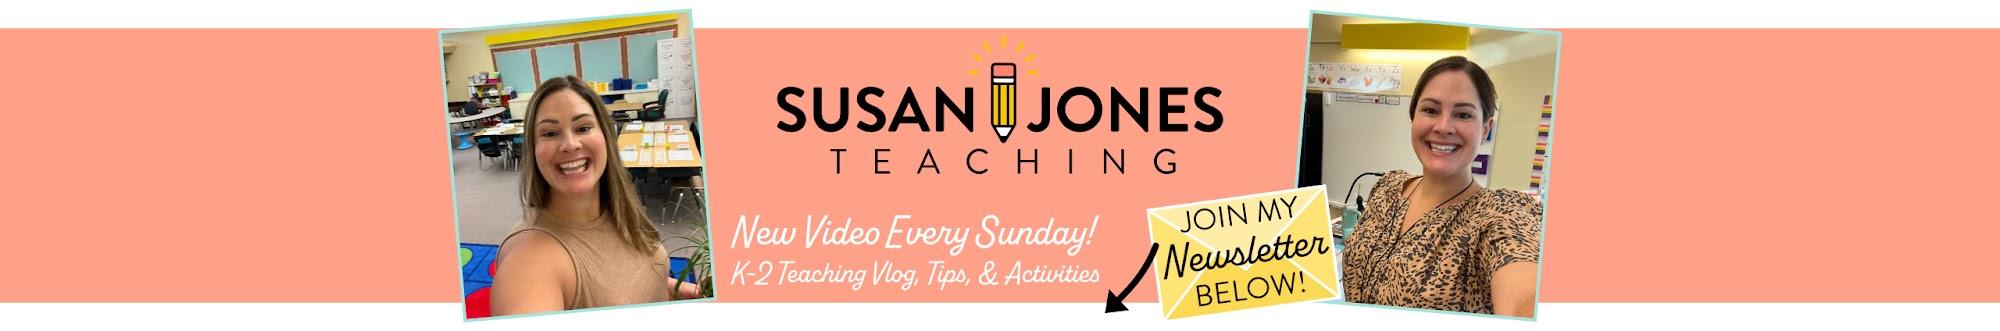 Susan Jones Teaching